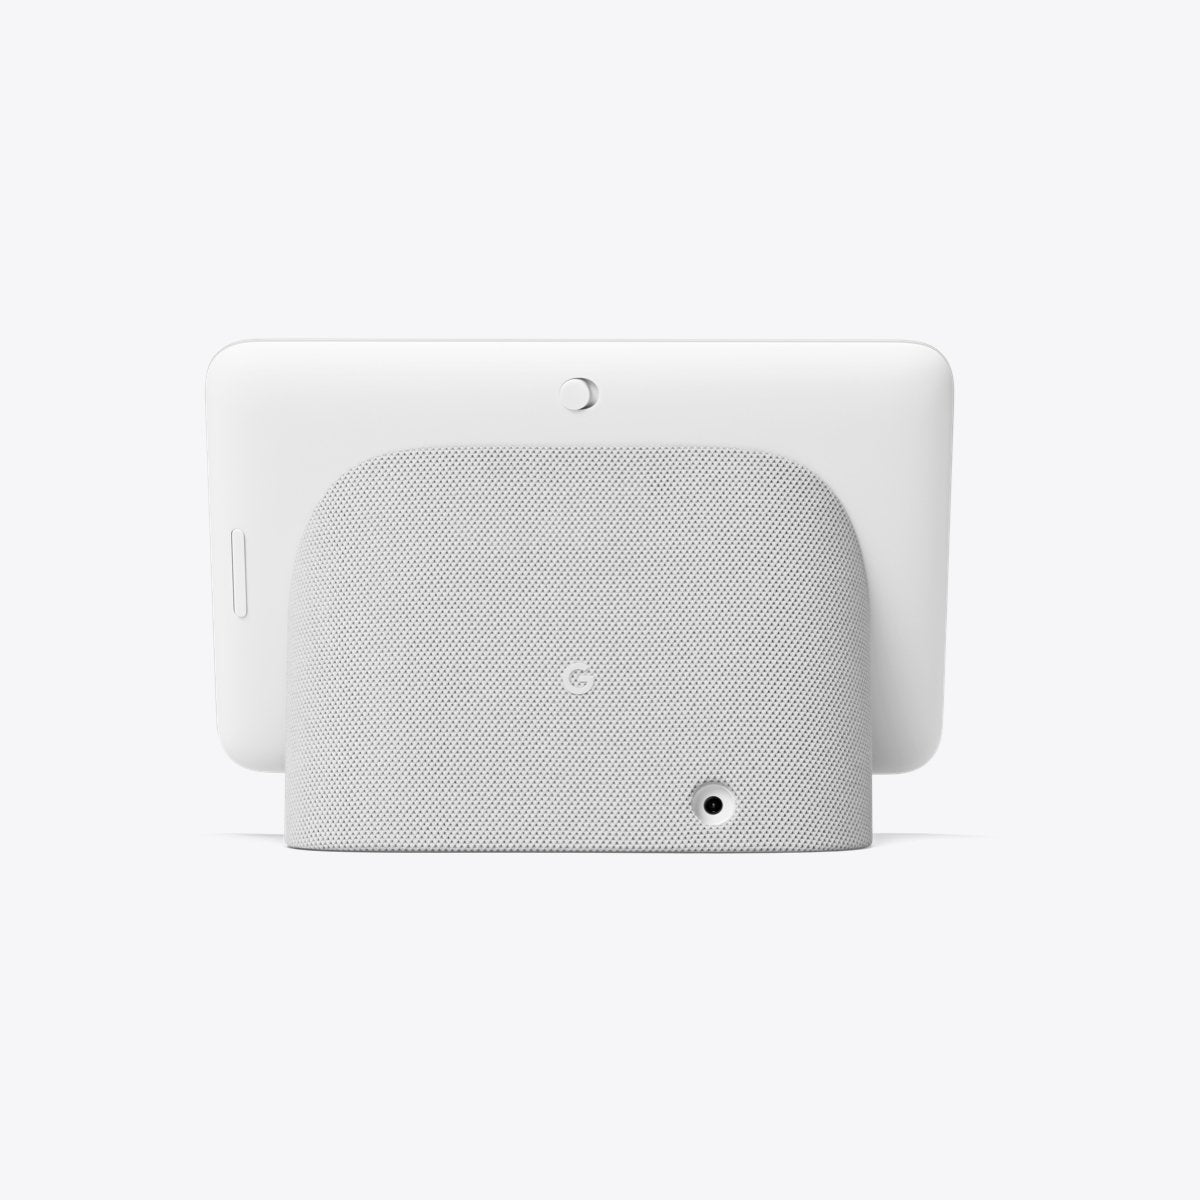 Google Nest Wifi Pro – OnTech